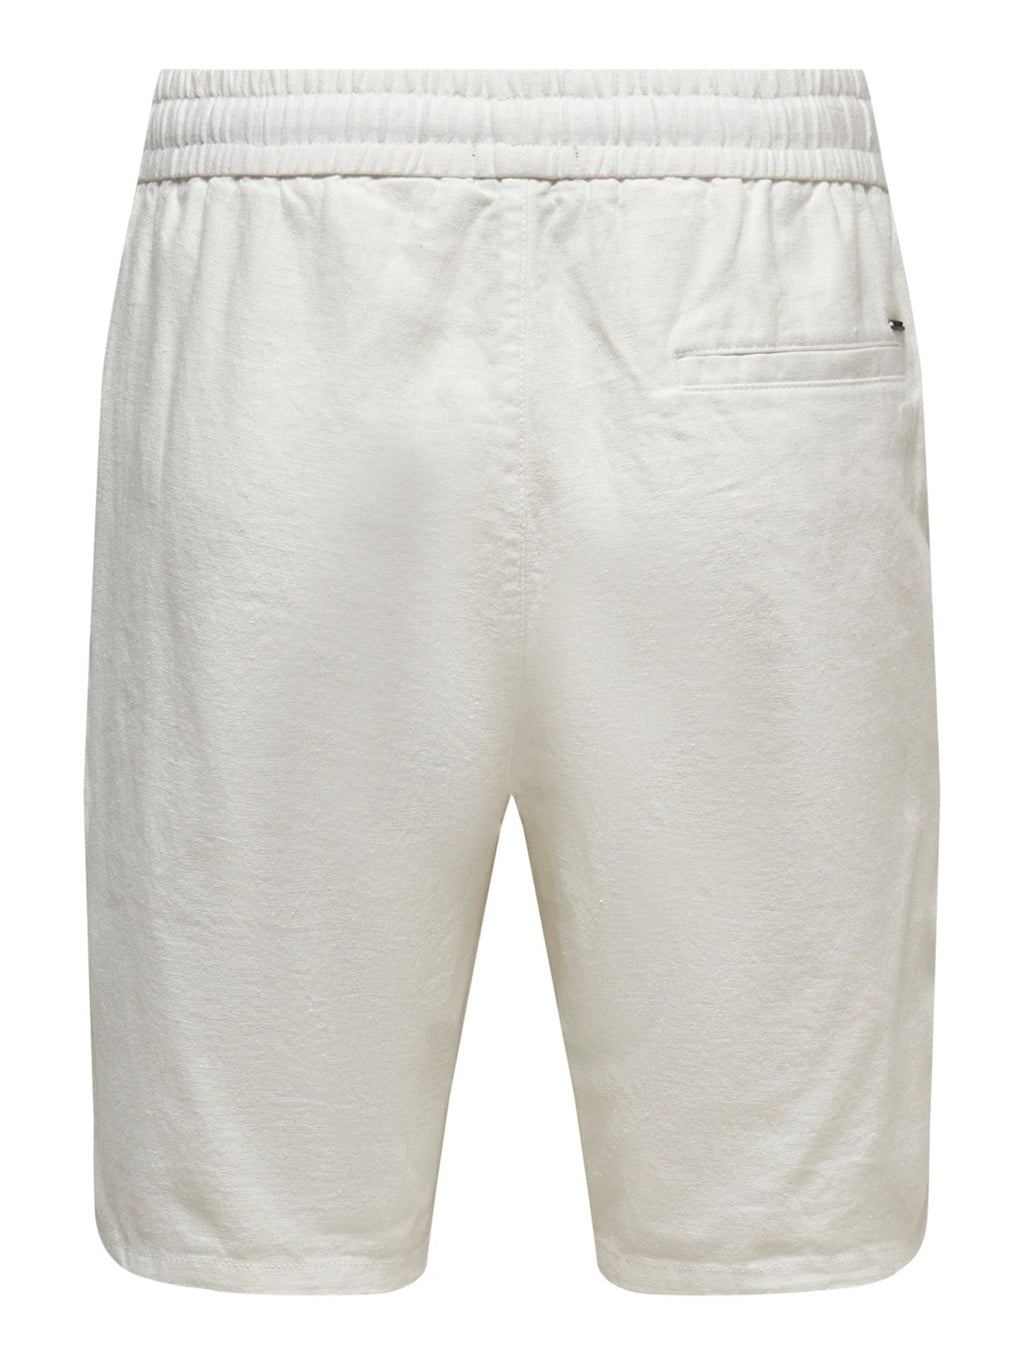 Shorts en lin Linus - blanc brillant